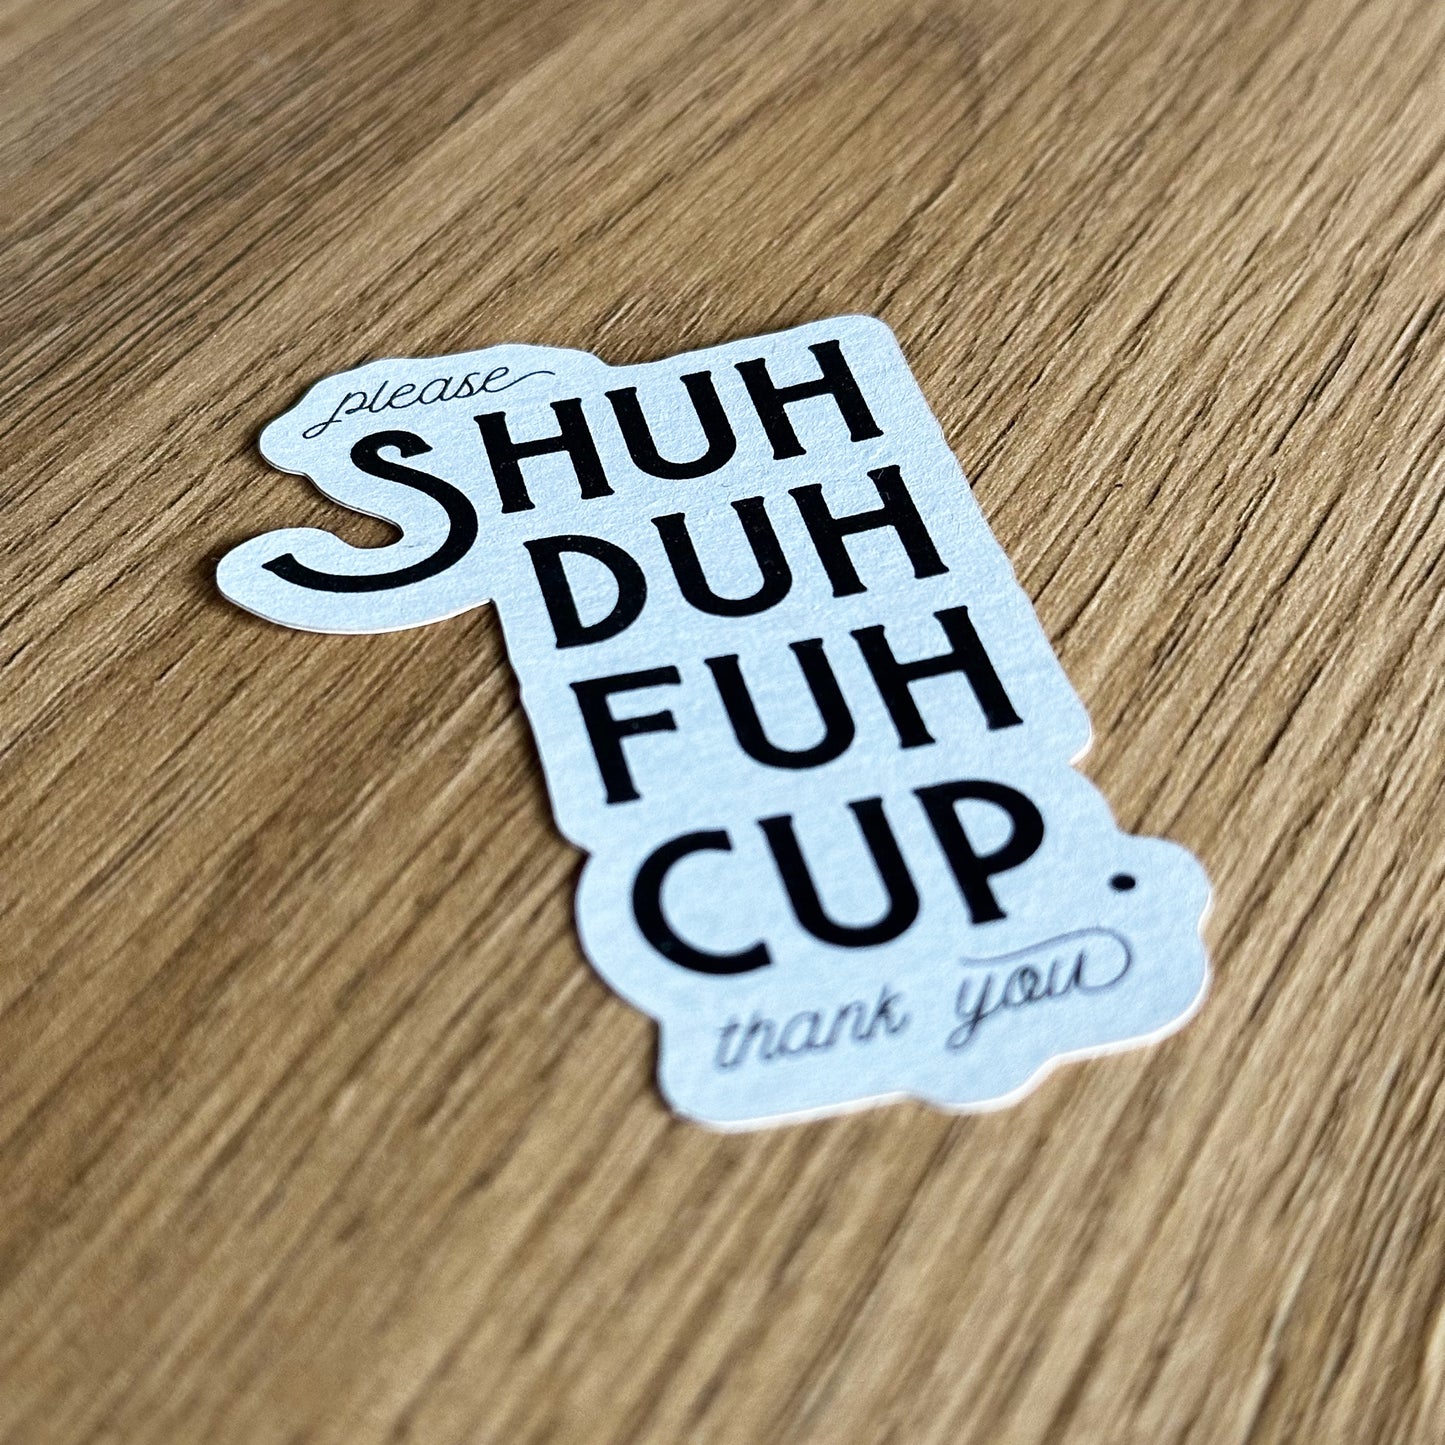 Sticker "Shuhduhfuhcup"